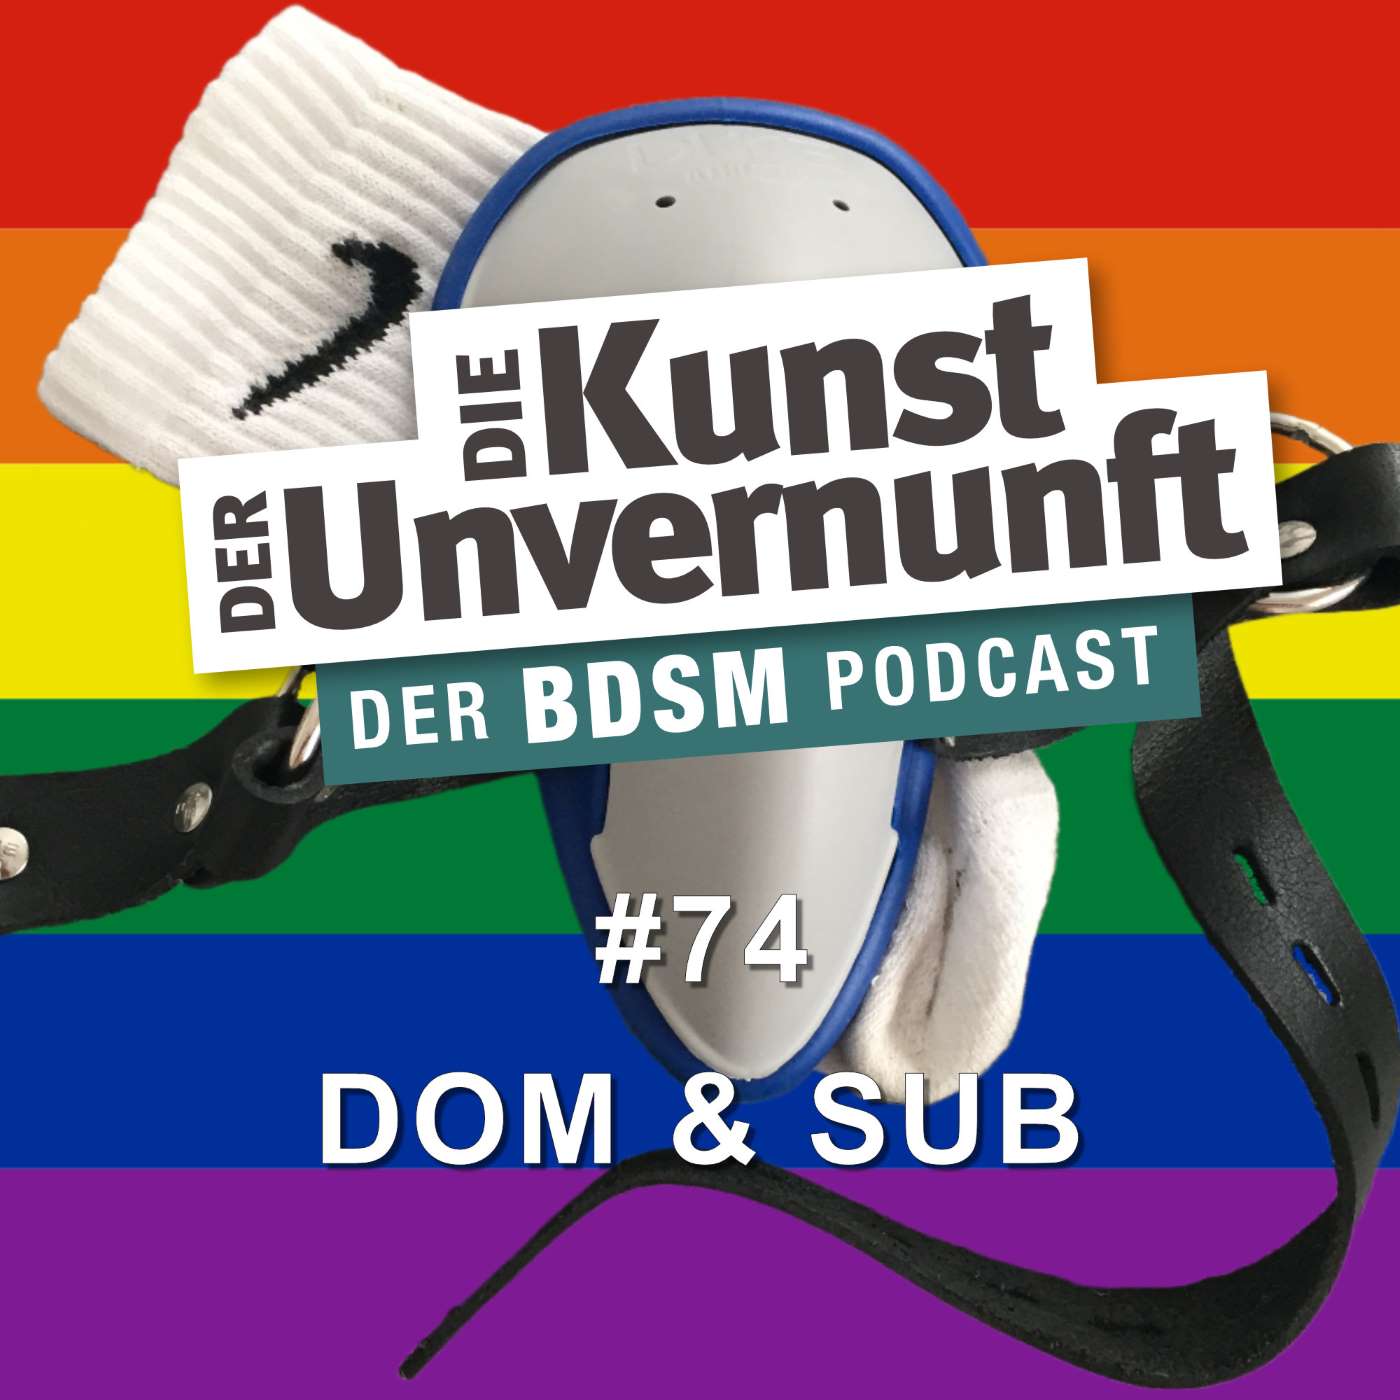 Dom & Sub - Schwuler BDSM? JA BITTE!